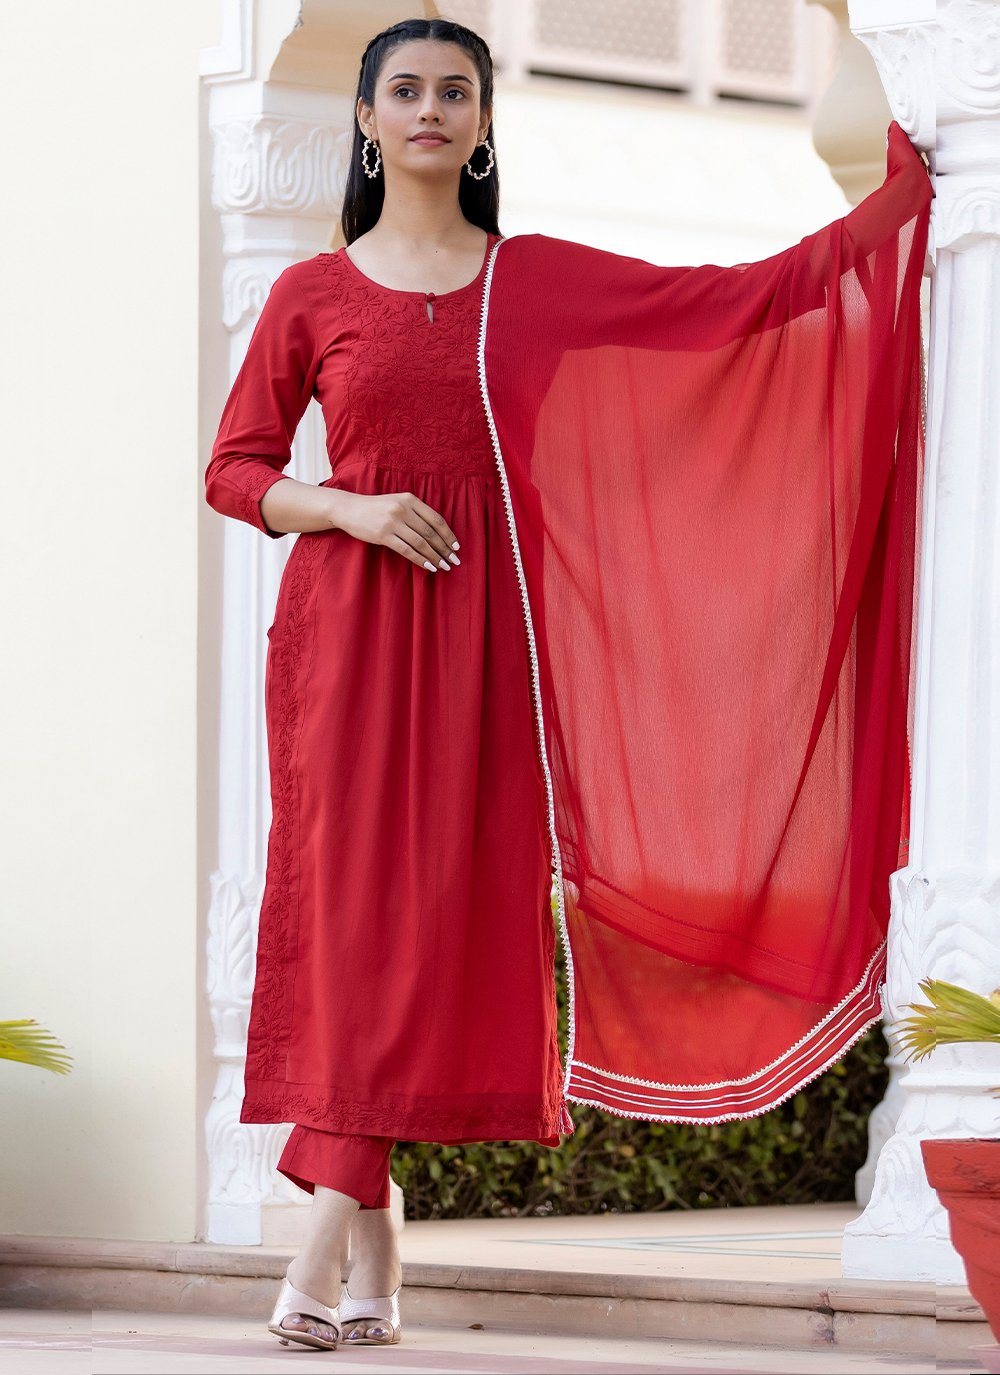 Dazzling Light Red Color Heavy Georgette With Embroidered Neck Salwar Suit  | Designer dresses indian, Stylish dresses, Indian designer outfits